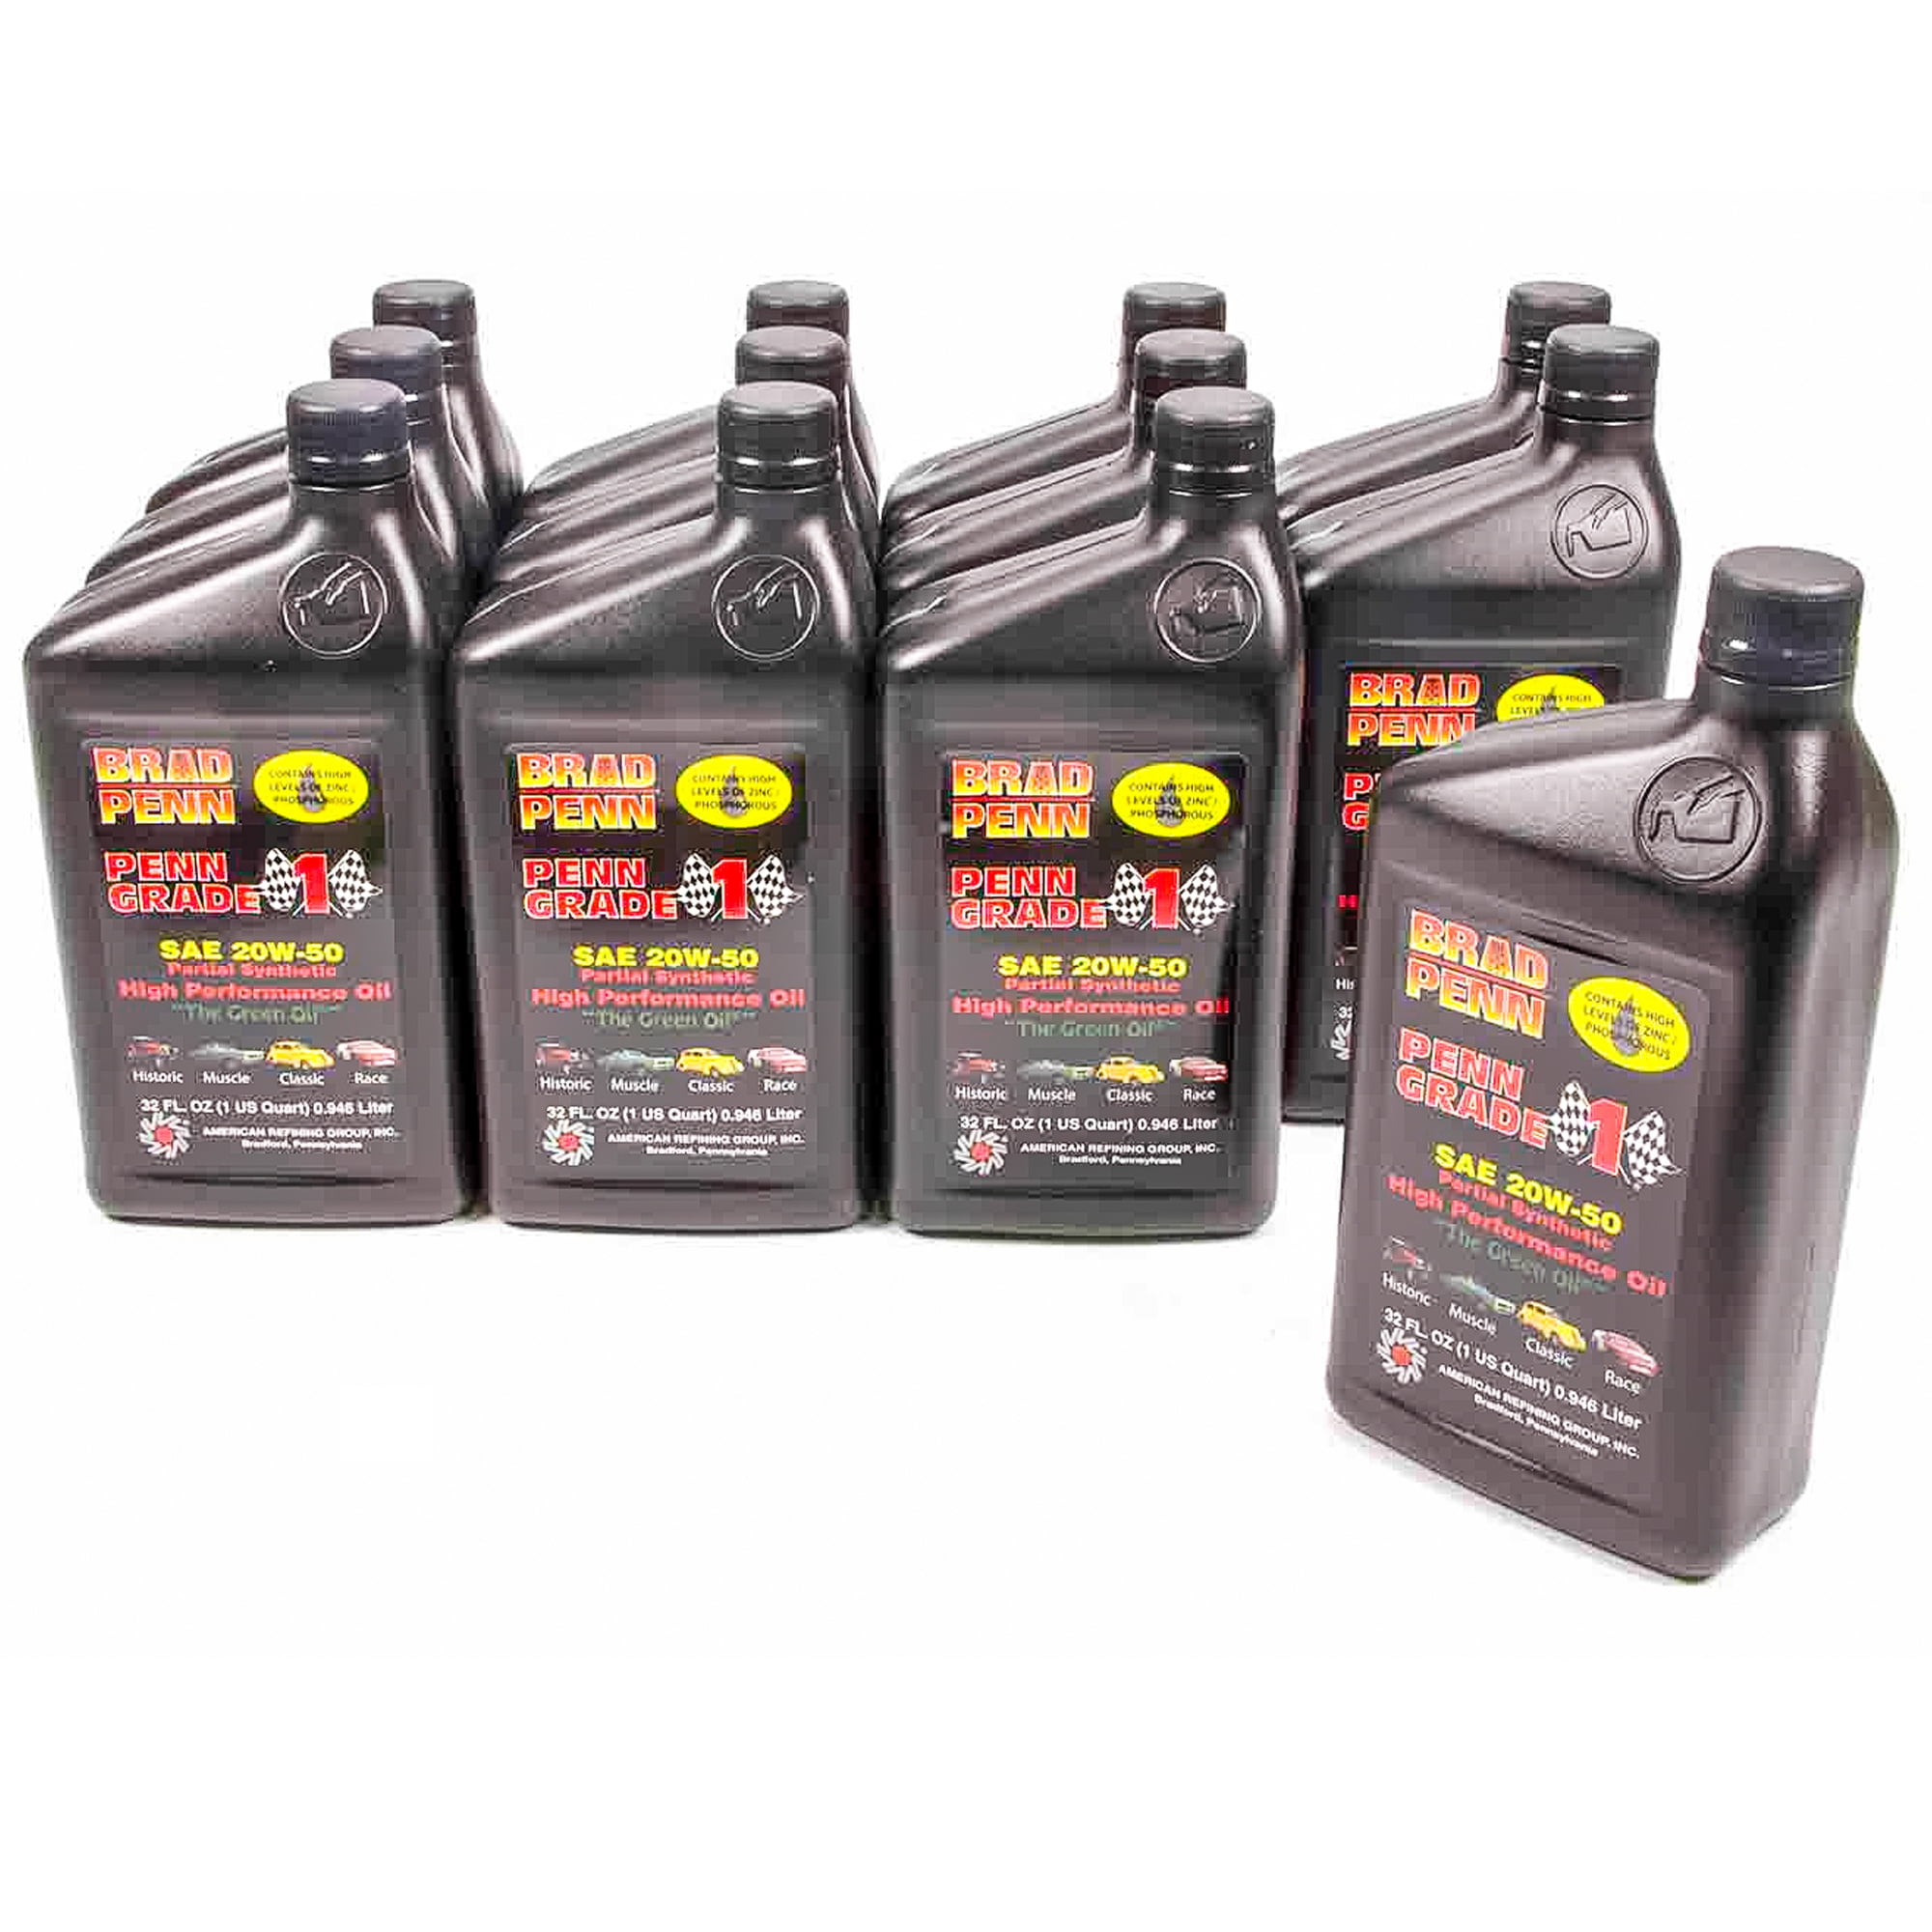 PENN GRADE 1 71196, Synthetic Blend High Performance Oil SAE 20W-50, 12  Quart